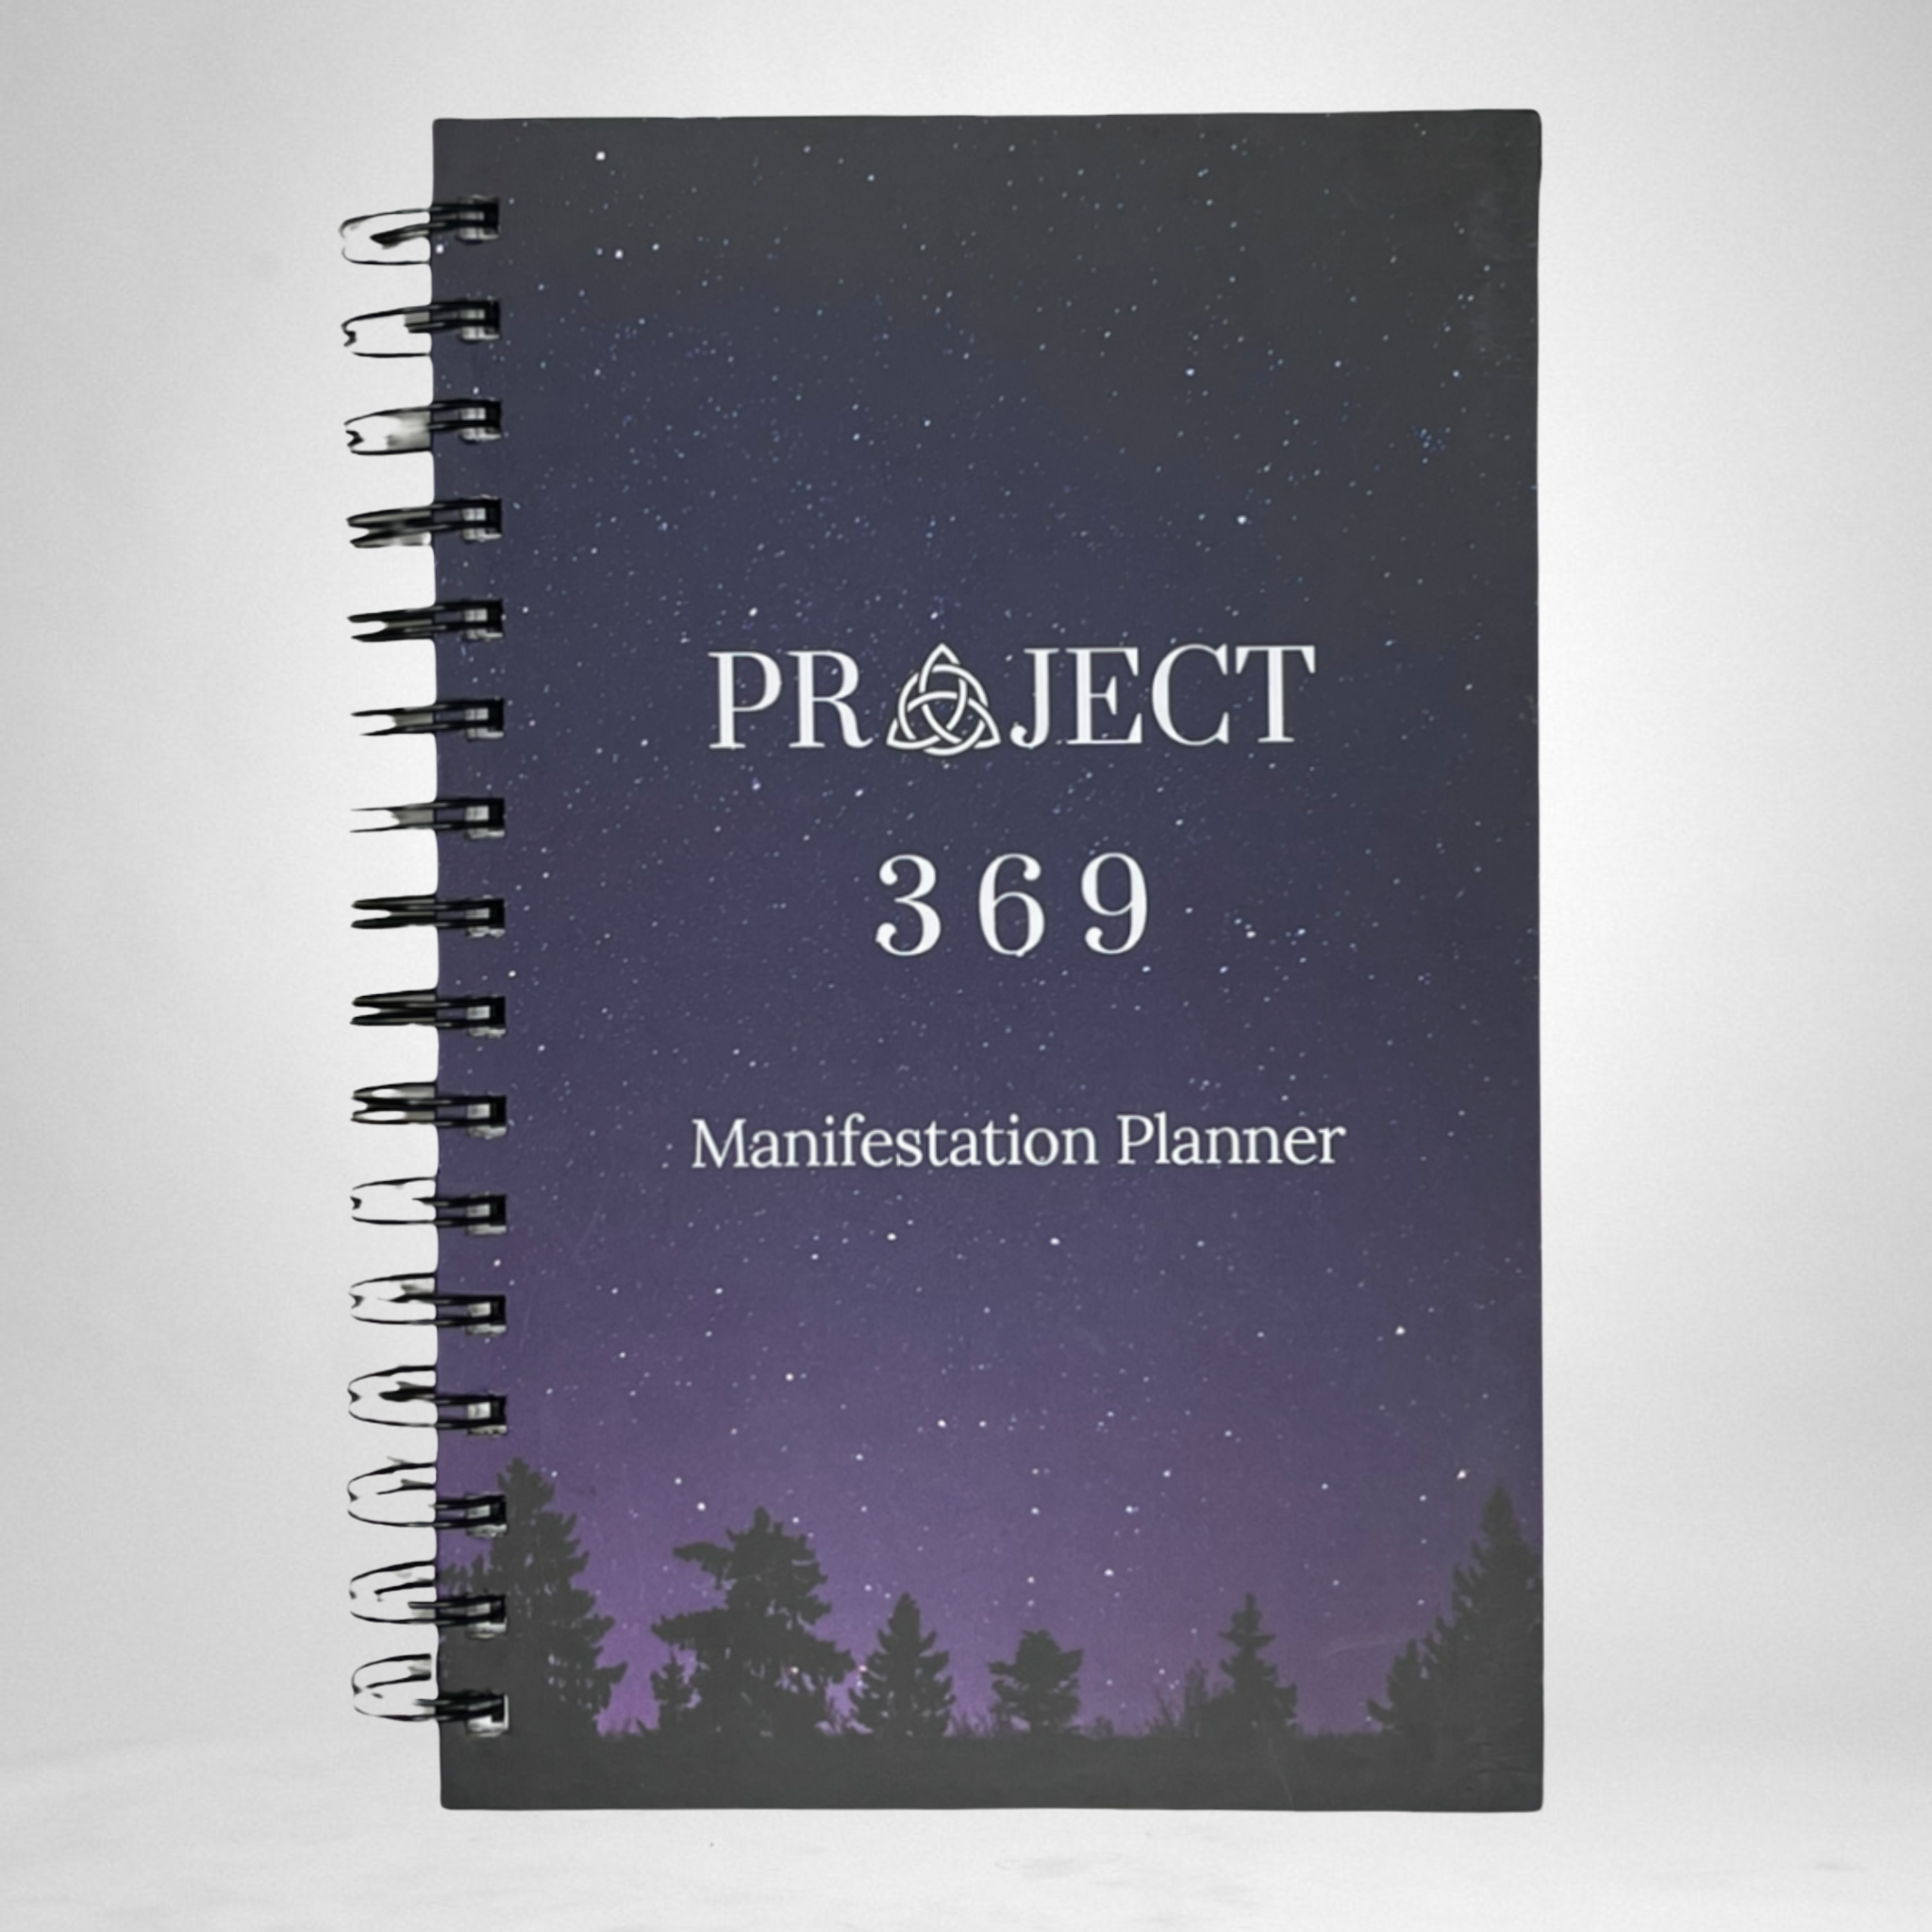 Project 369 - Manifestation Planner